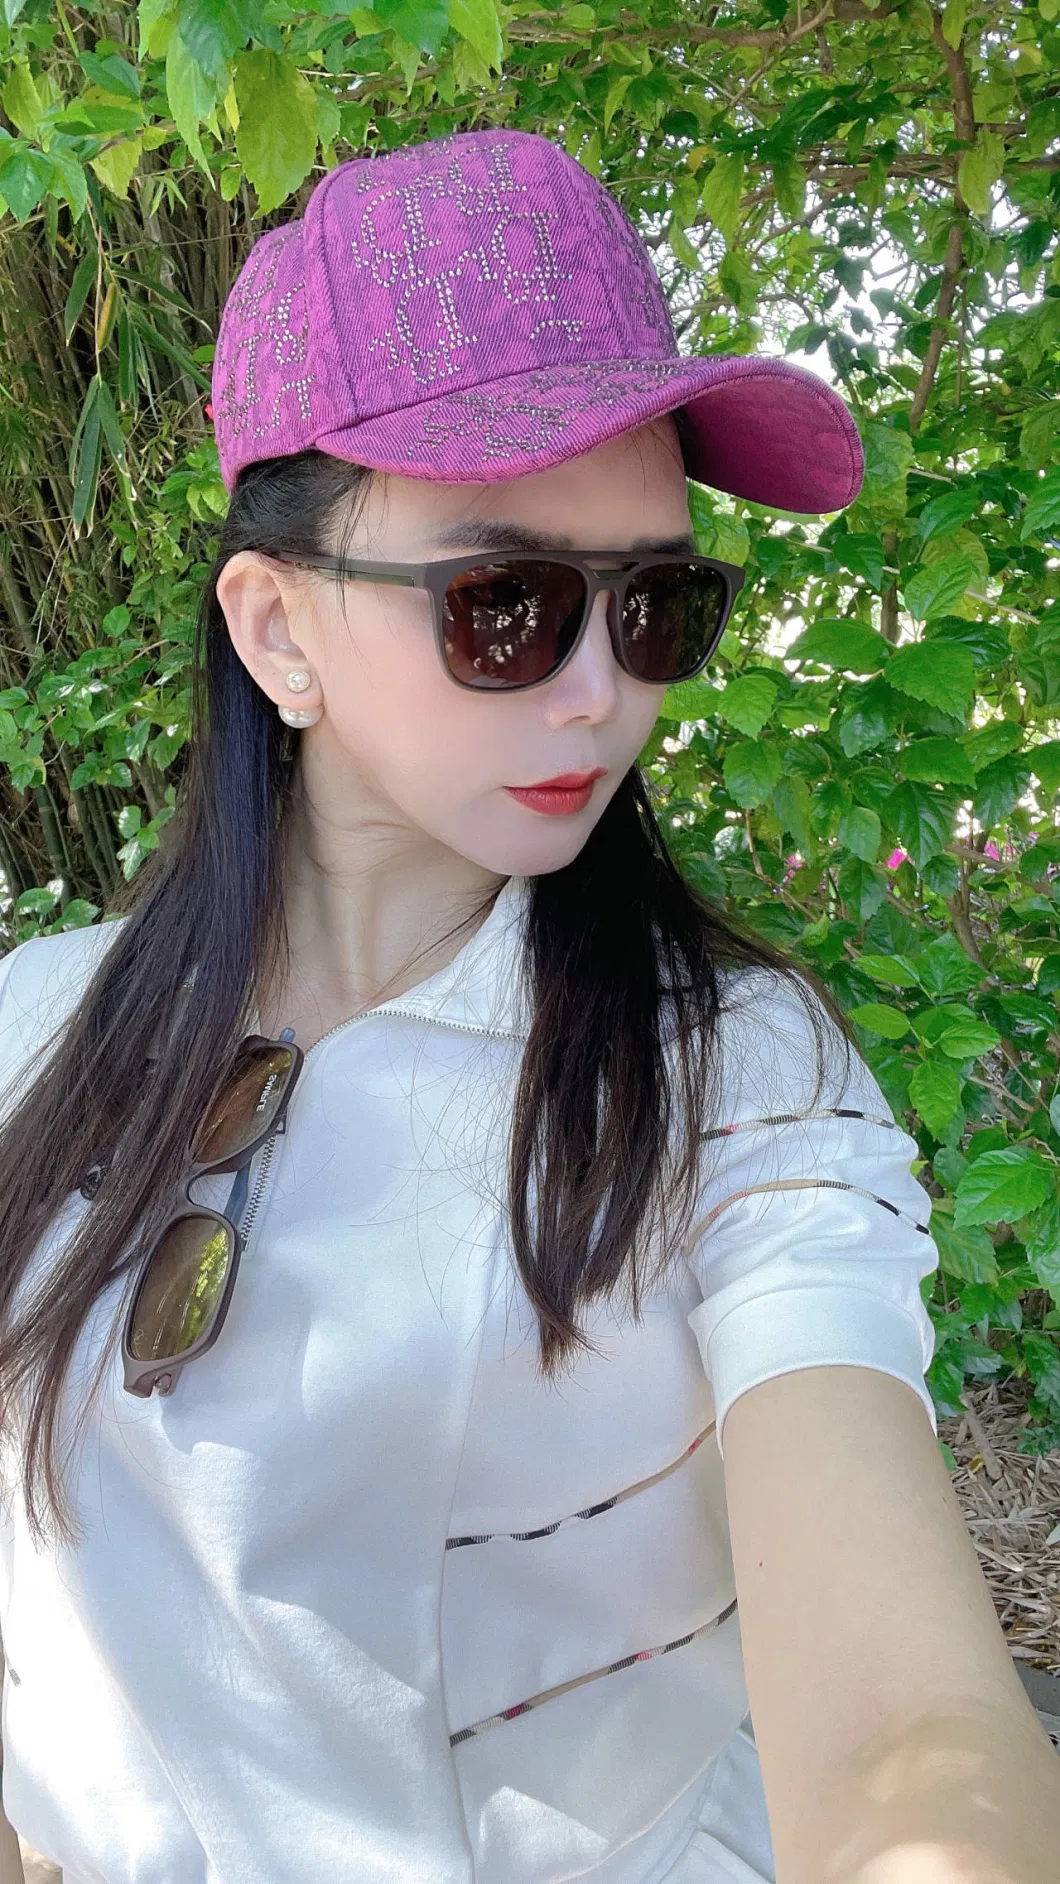 China Qualified SGS Authorized Sunglass CE New Free Samples Fashion Brand Designer Women Imitation Recycled Ray Lentes De Sol Ban Fashion Sunglasses New Sunglas